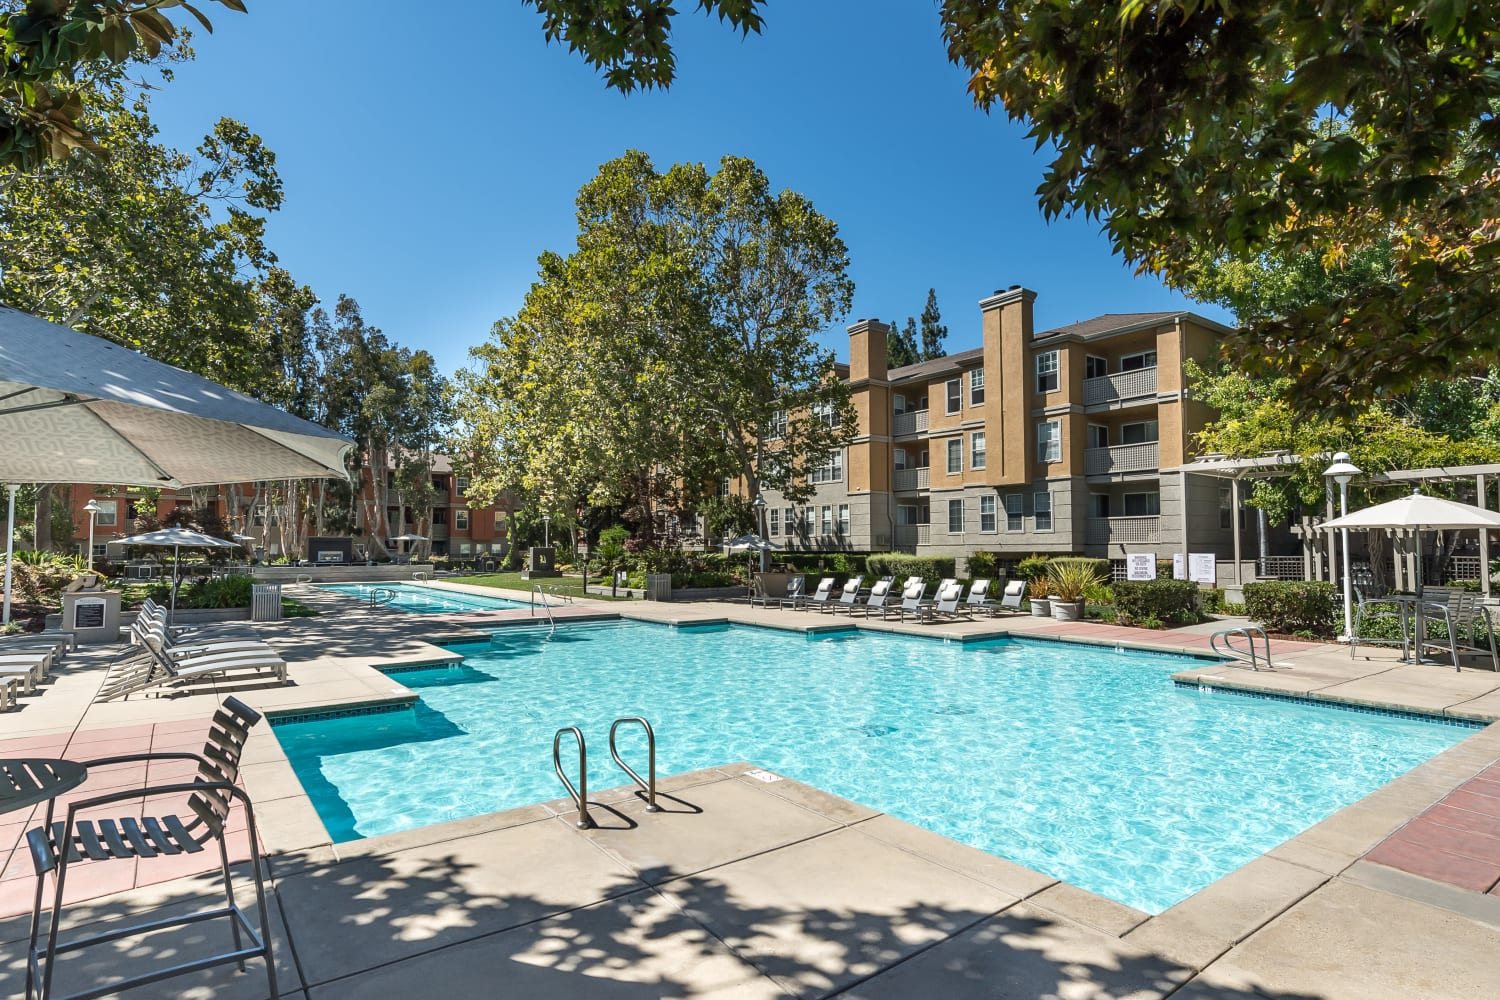 Exterior community pool at Bella Vista Apartments in Santa Clara, California